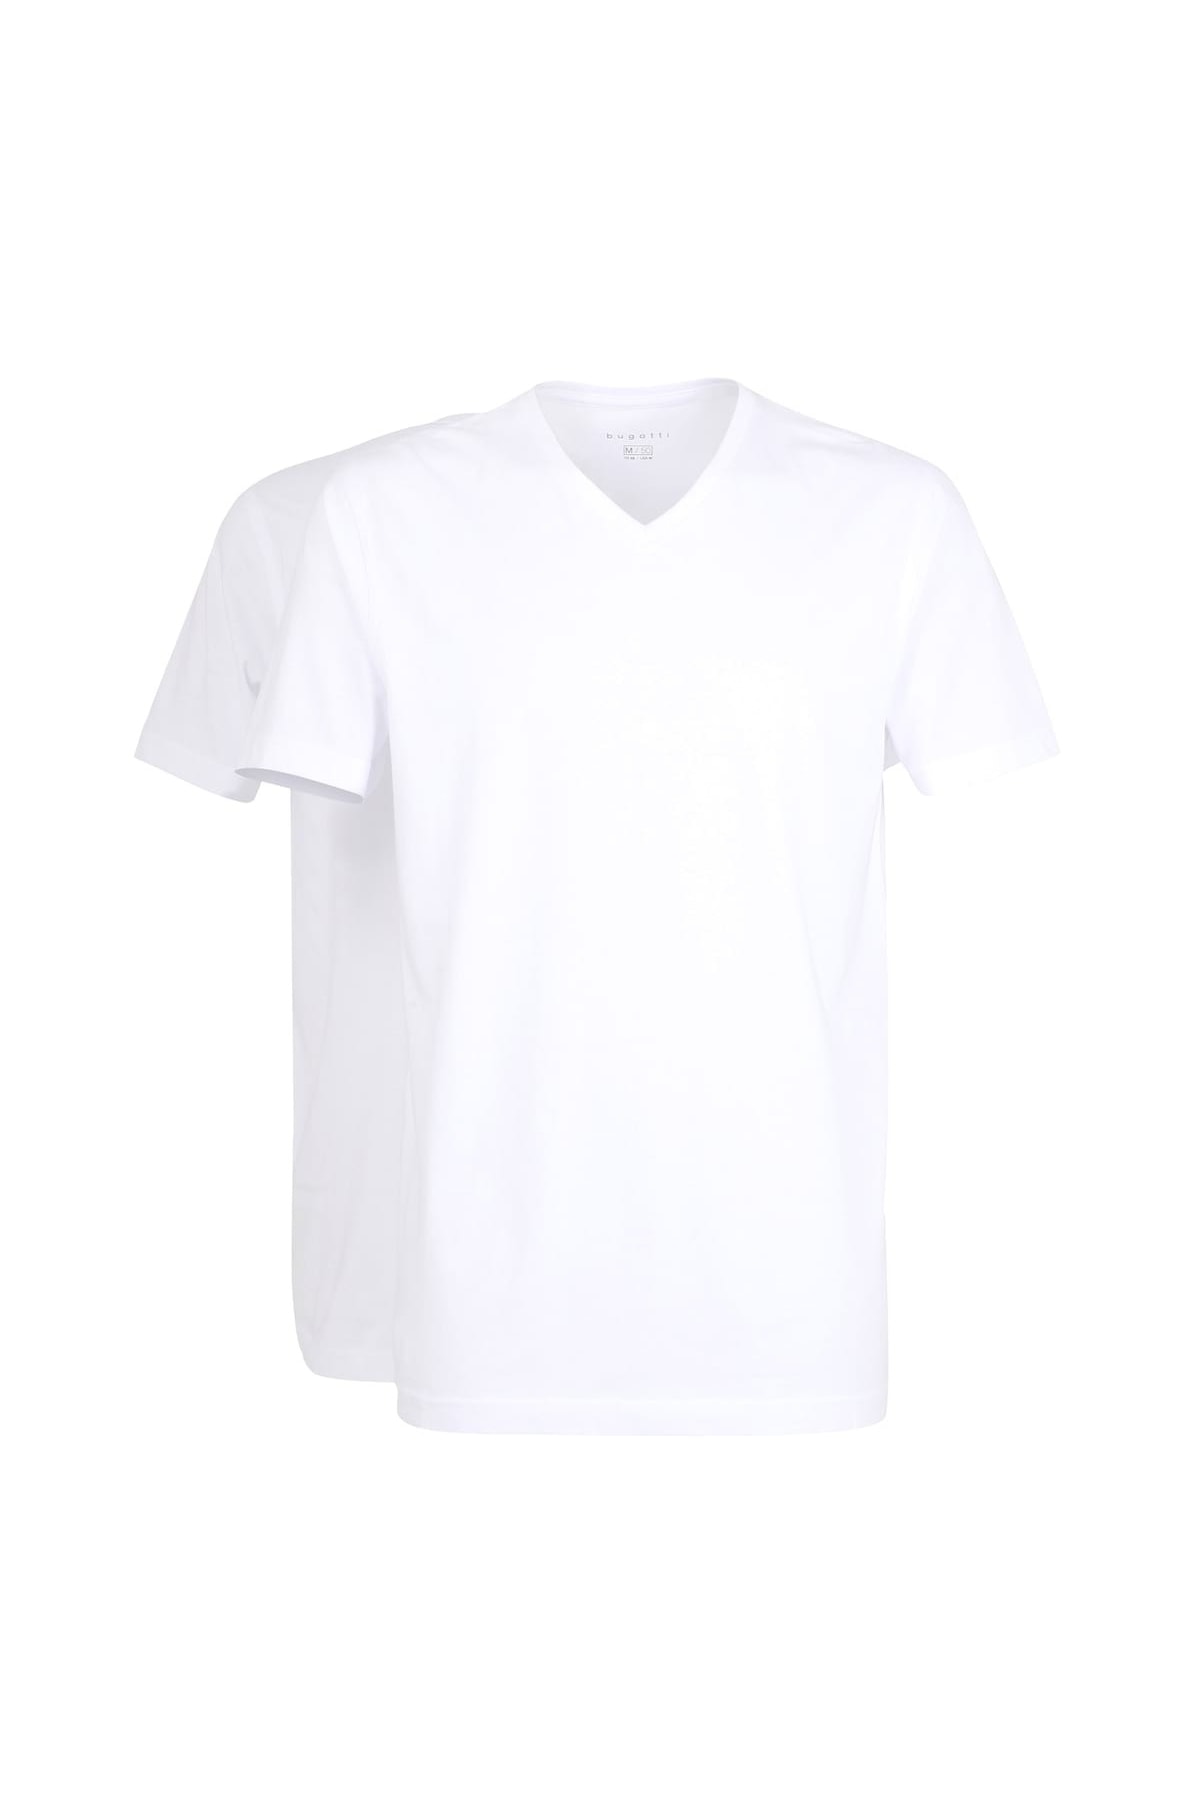 BUGATTI T-Shirt Weiß Regular Fit Fast ausverkauft